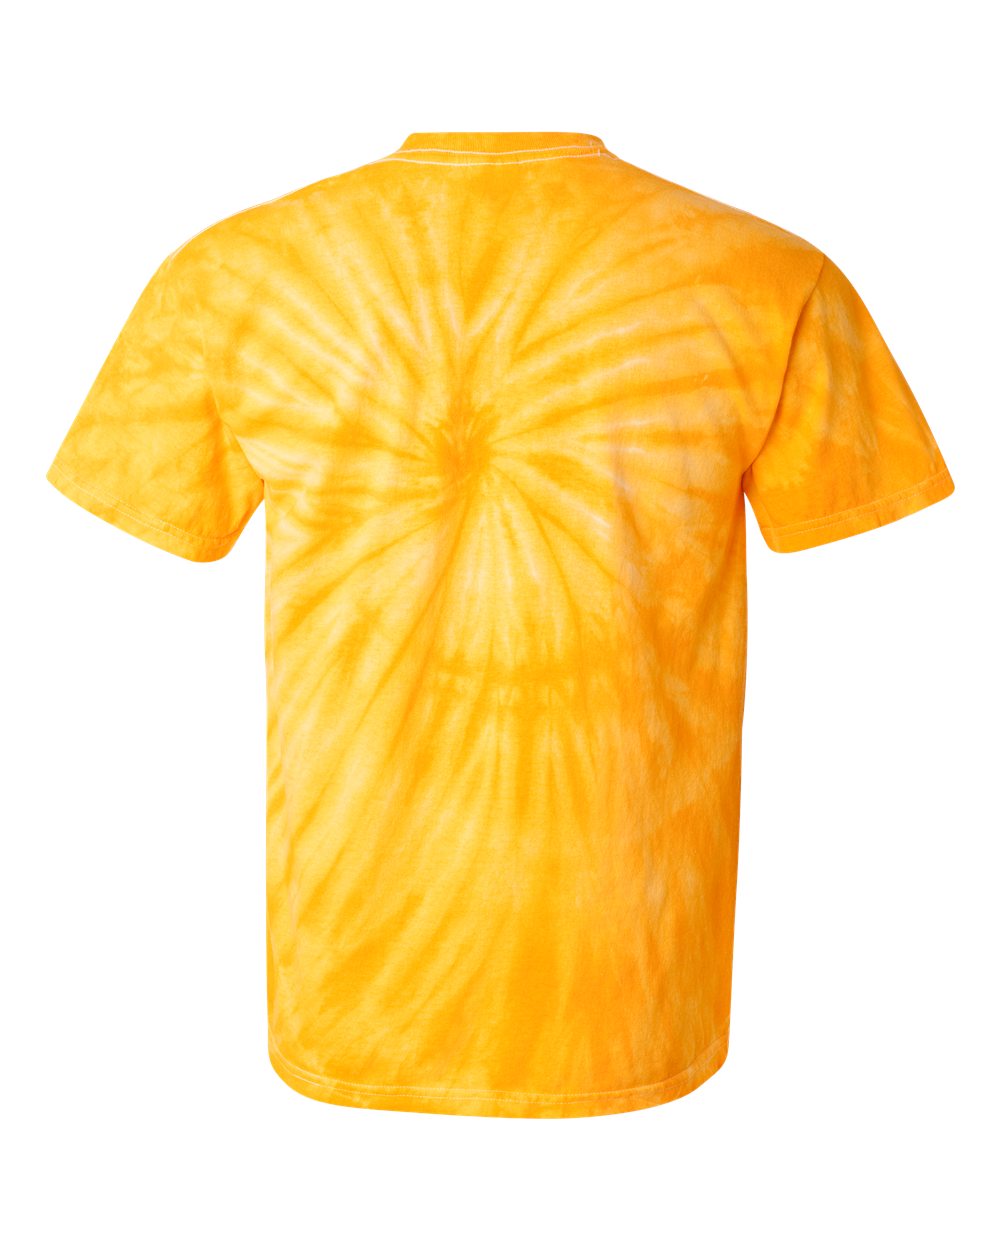 Espiral Dye - Amarillo